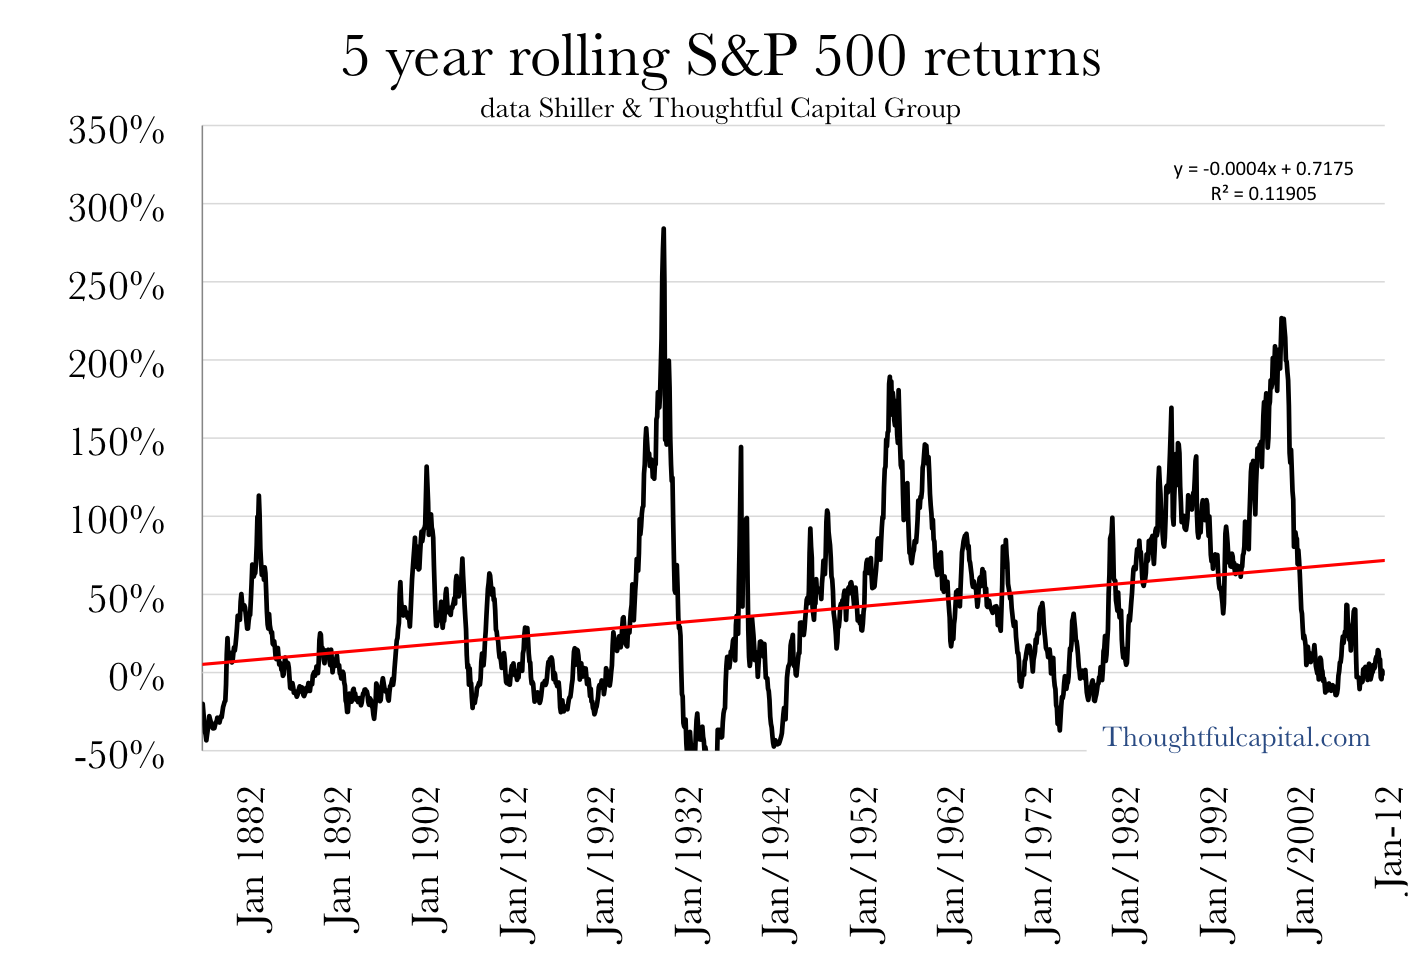 5 yr rolling S&P 500 returns 1871-2011